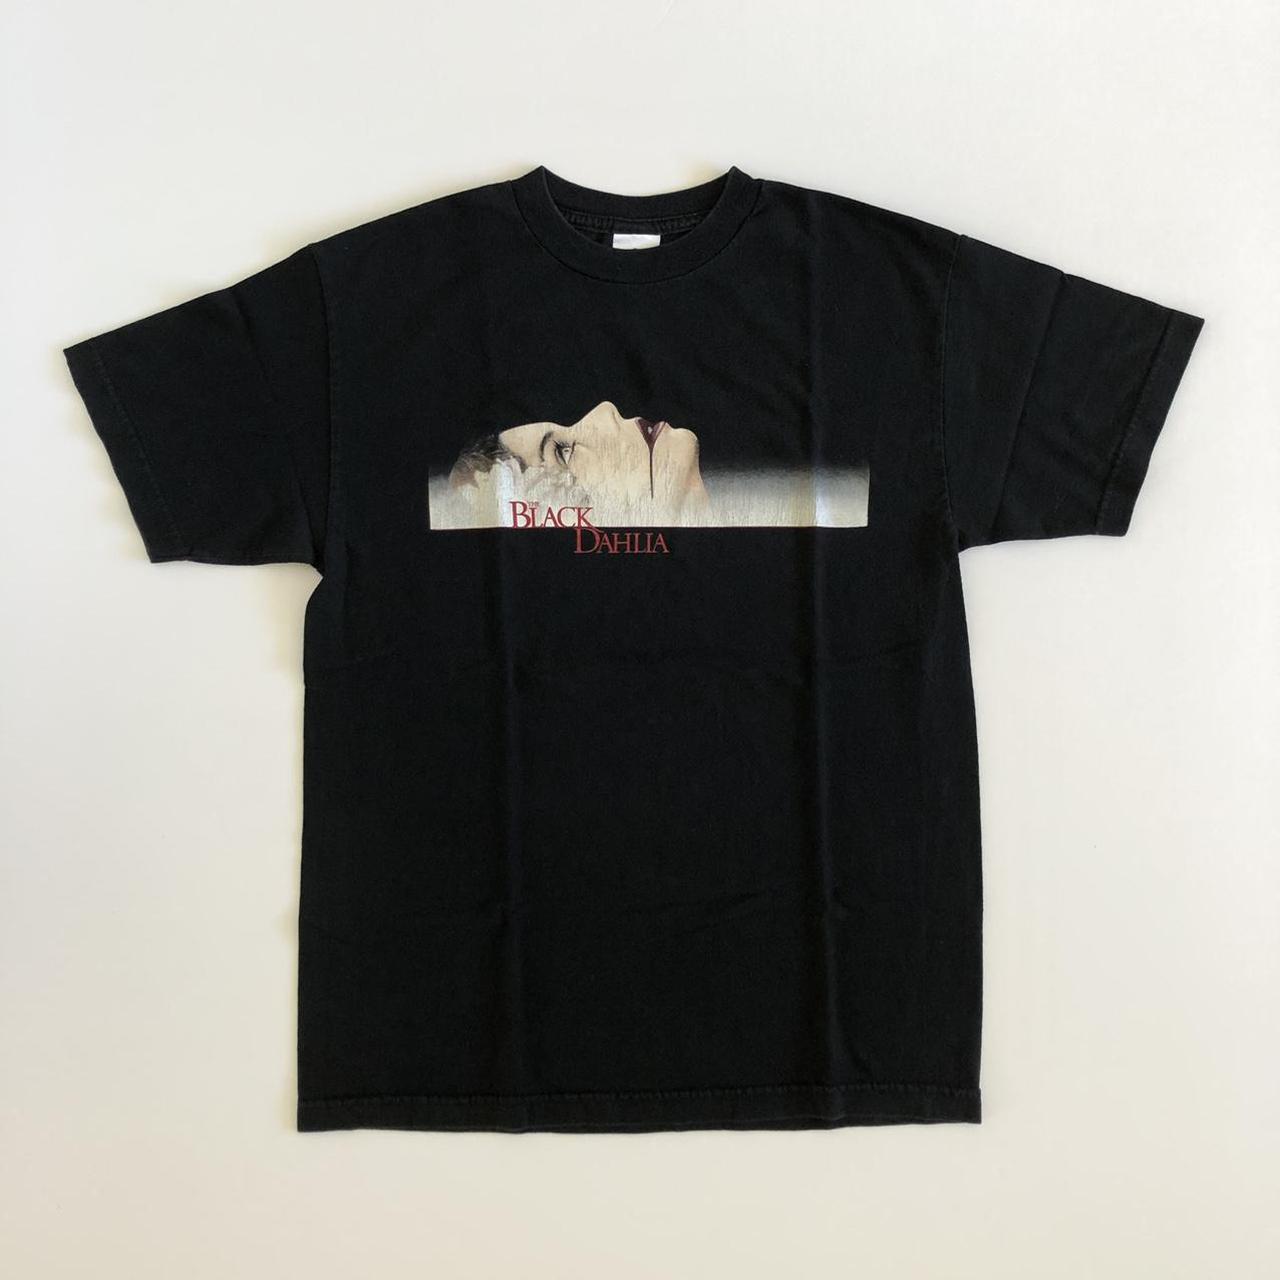 2006 The Black Dahlia movie promo tee/t-shirt 🖤 